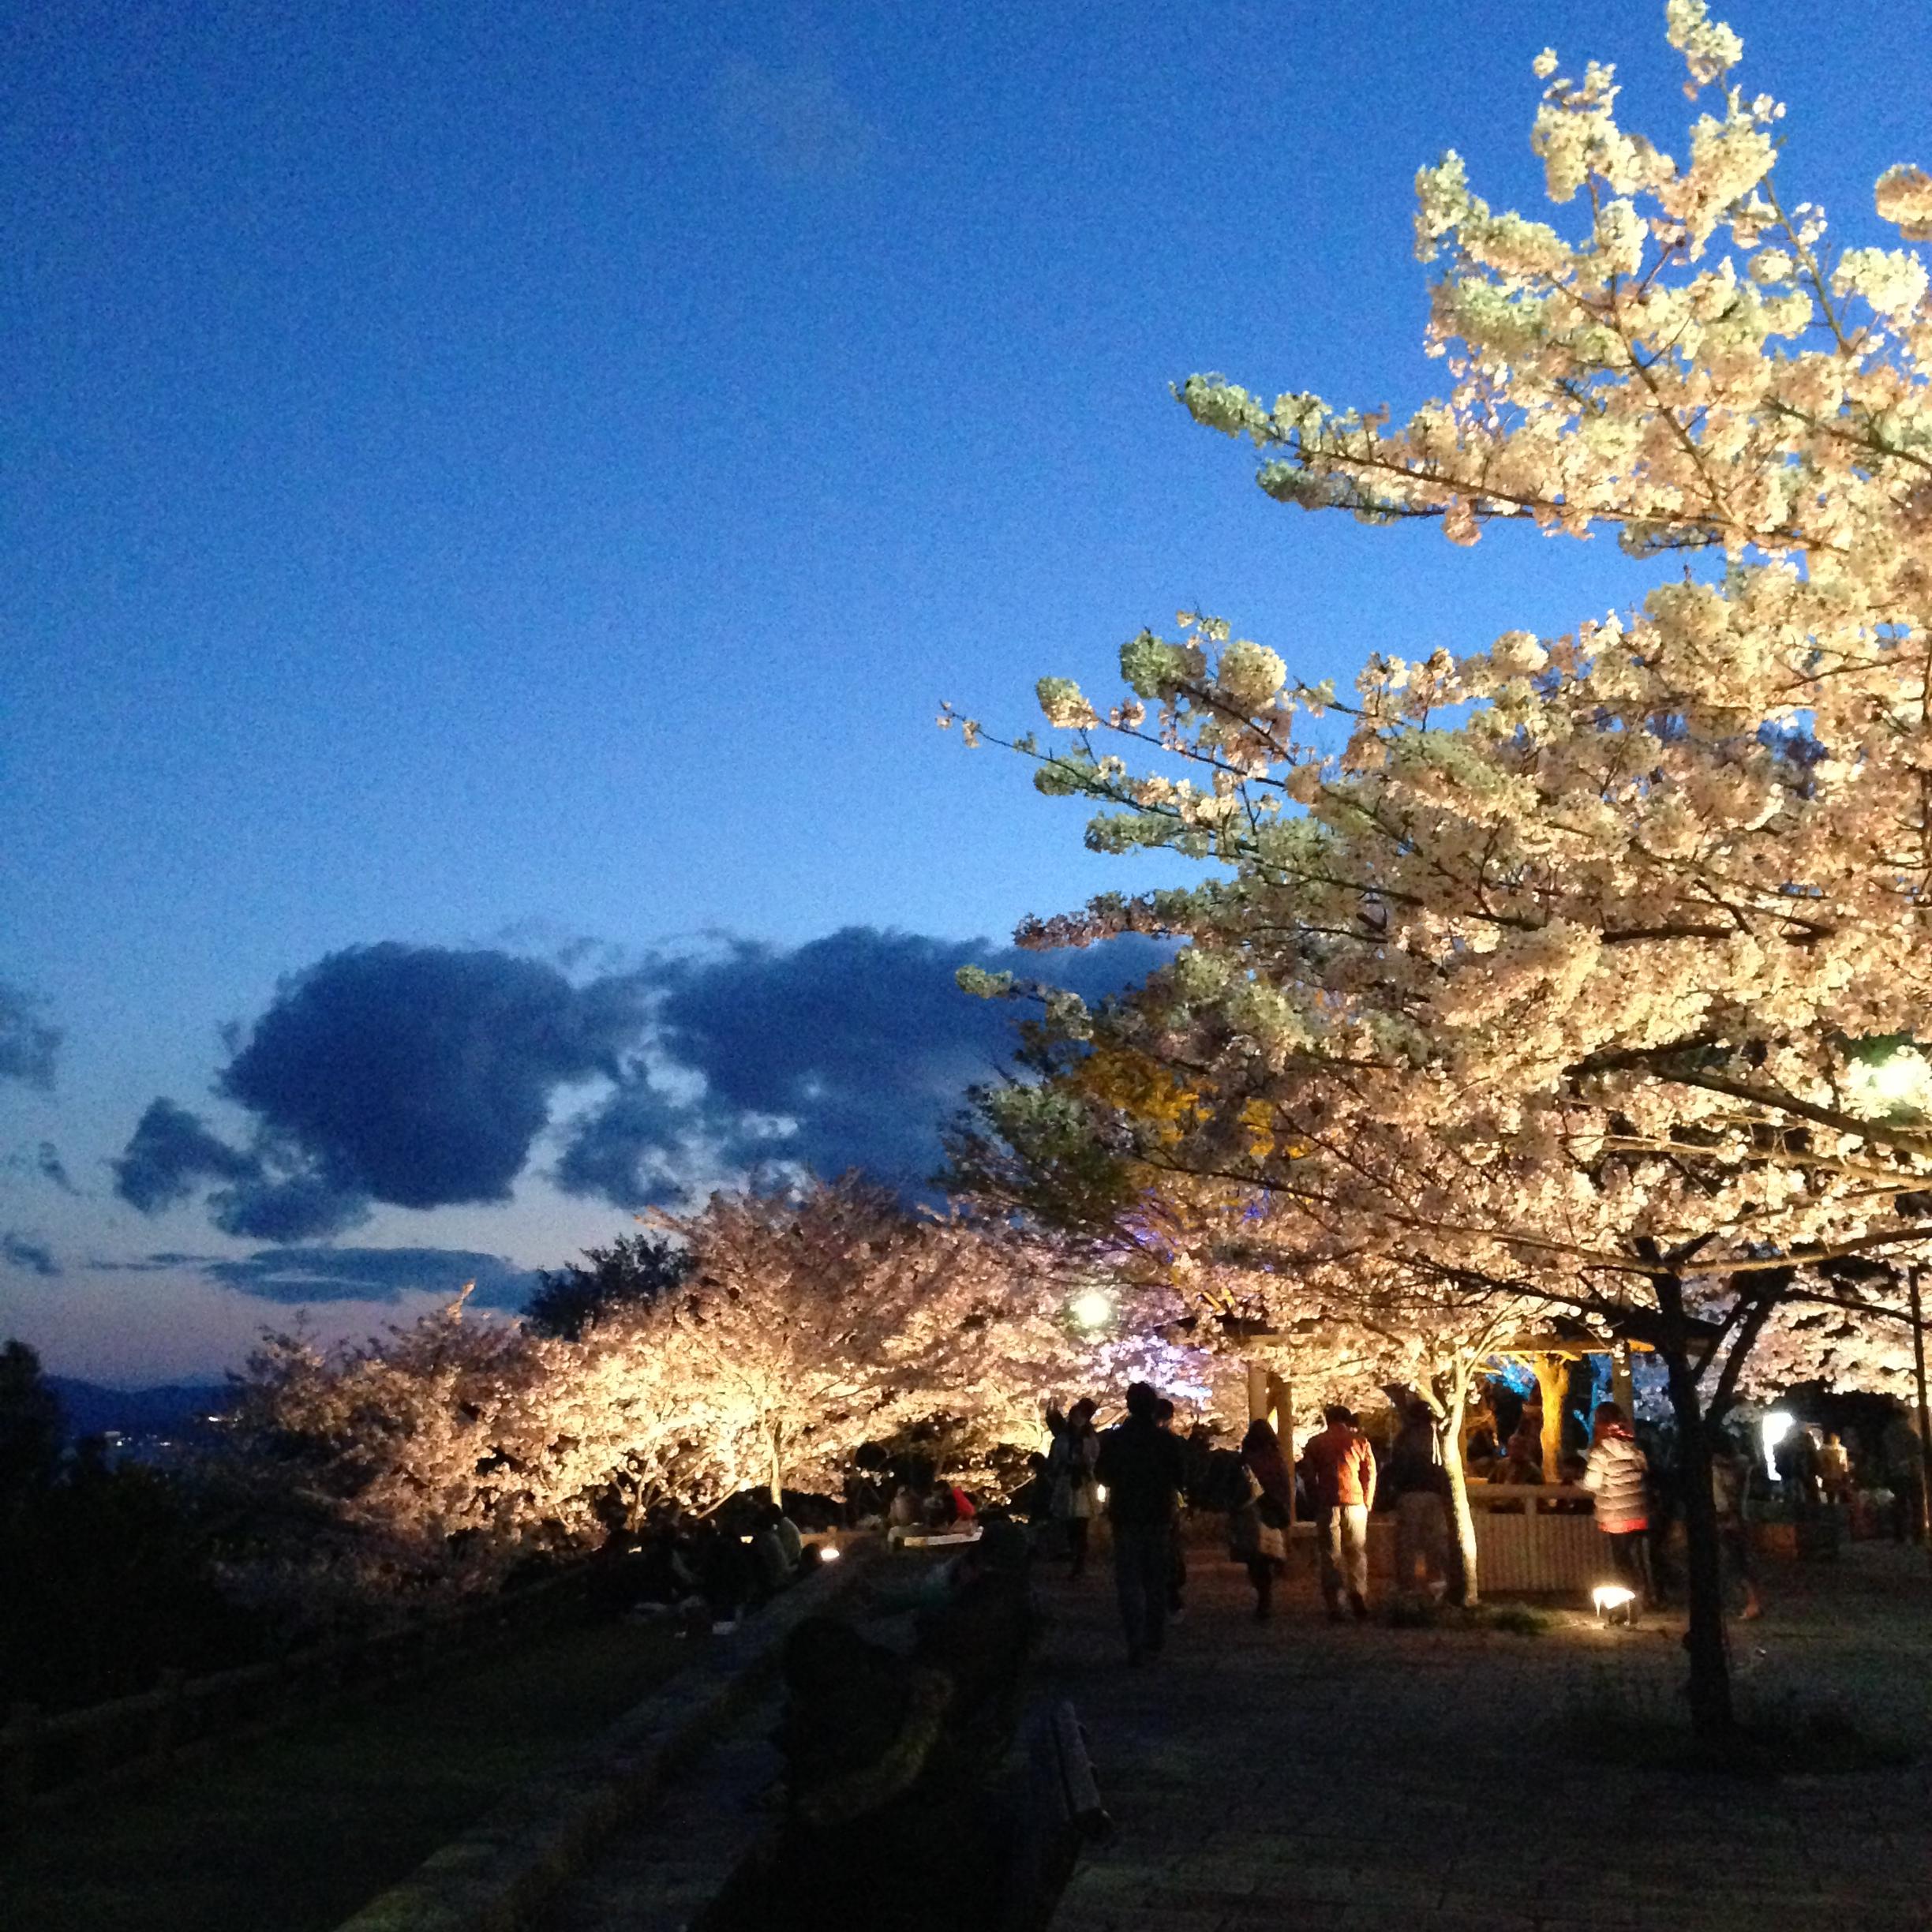 Cover image of this place 須磨浦公園( Sunamura park)